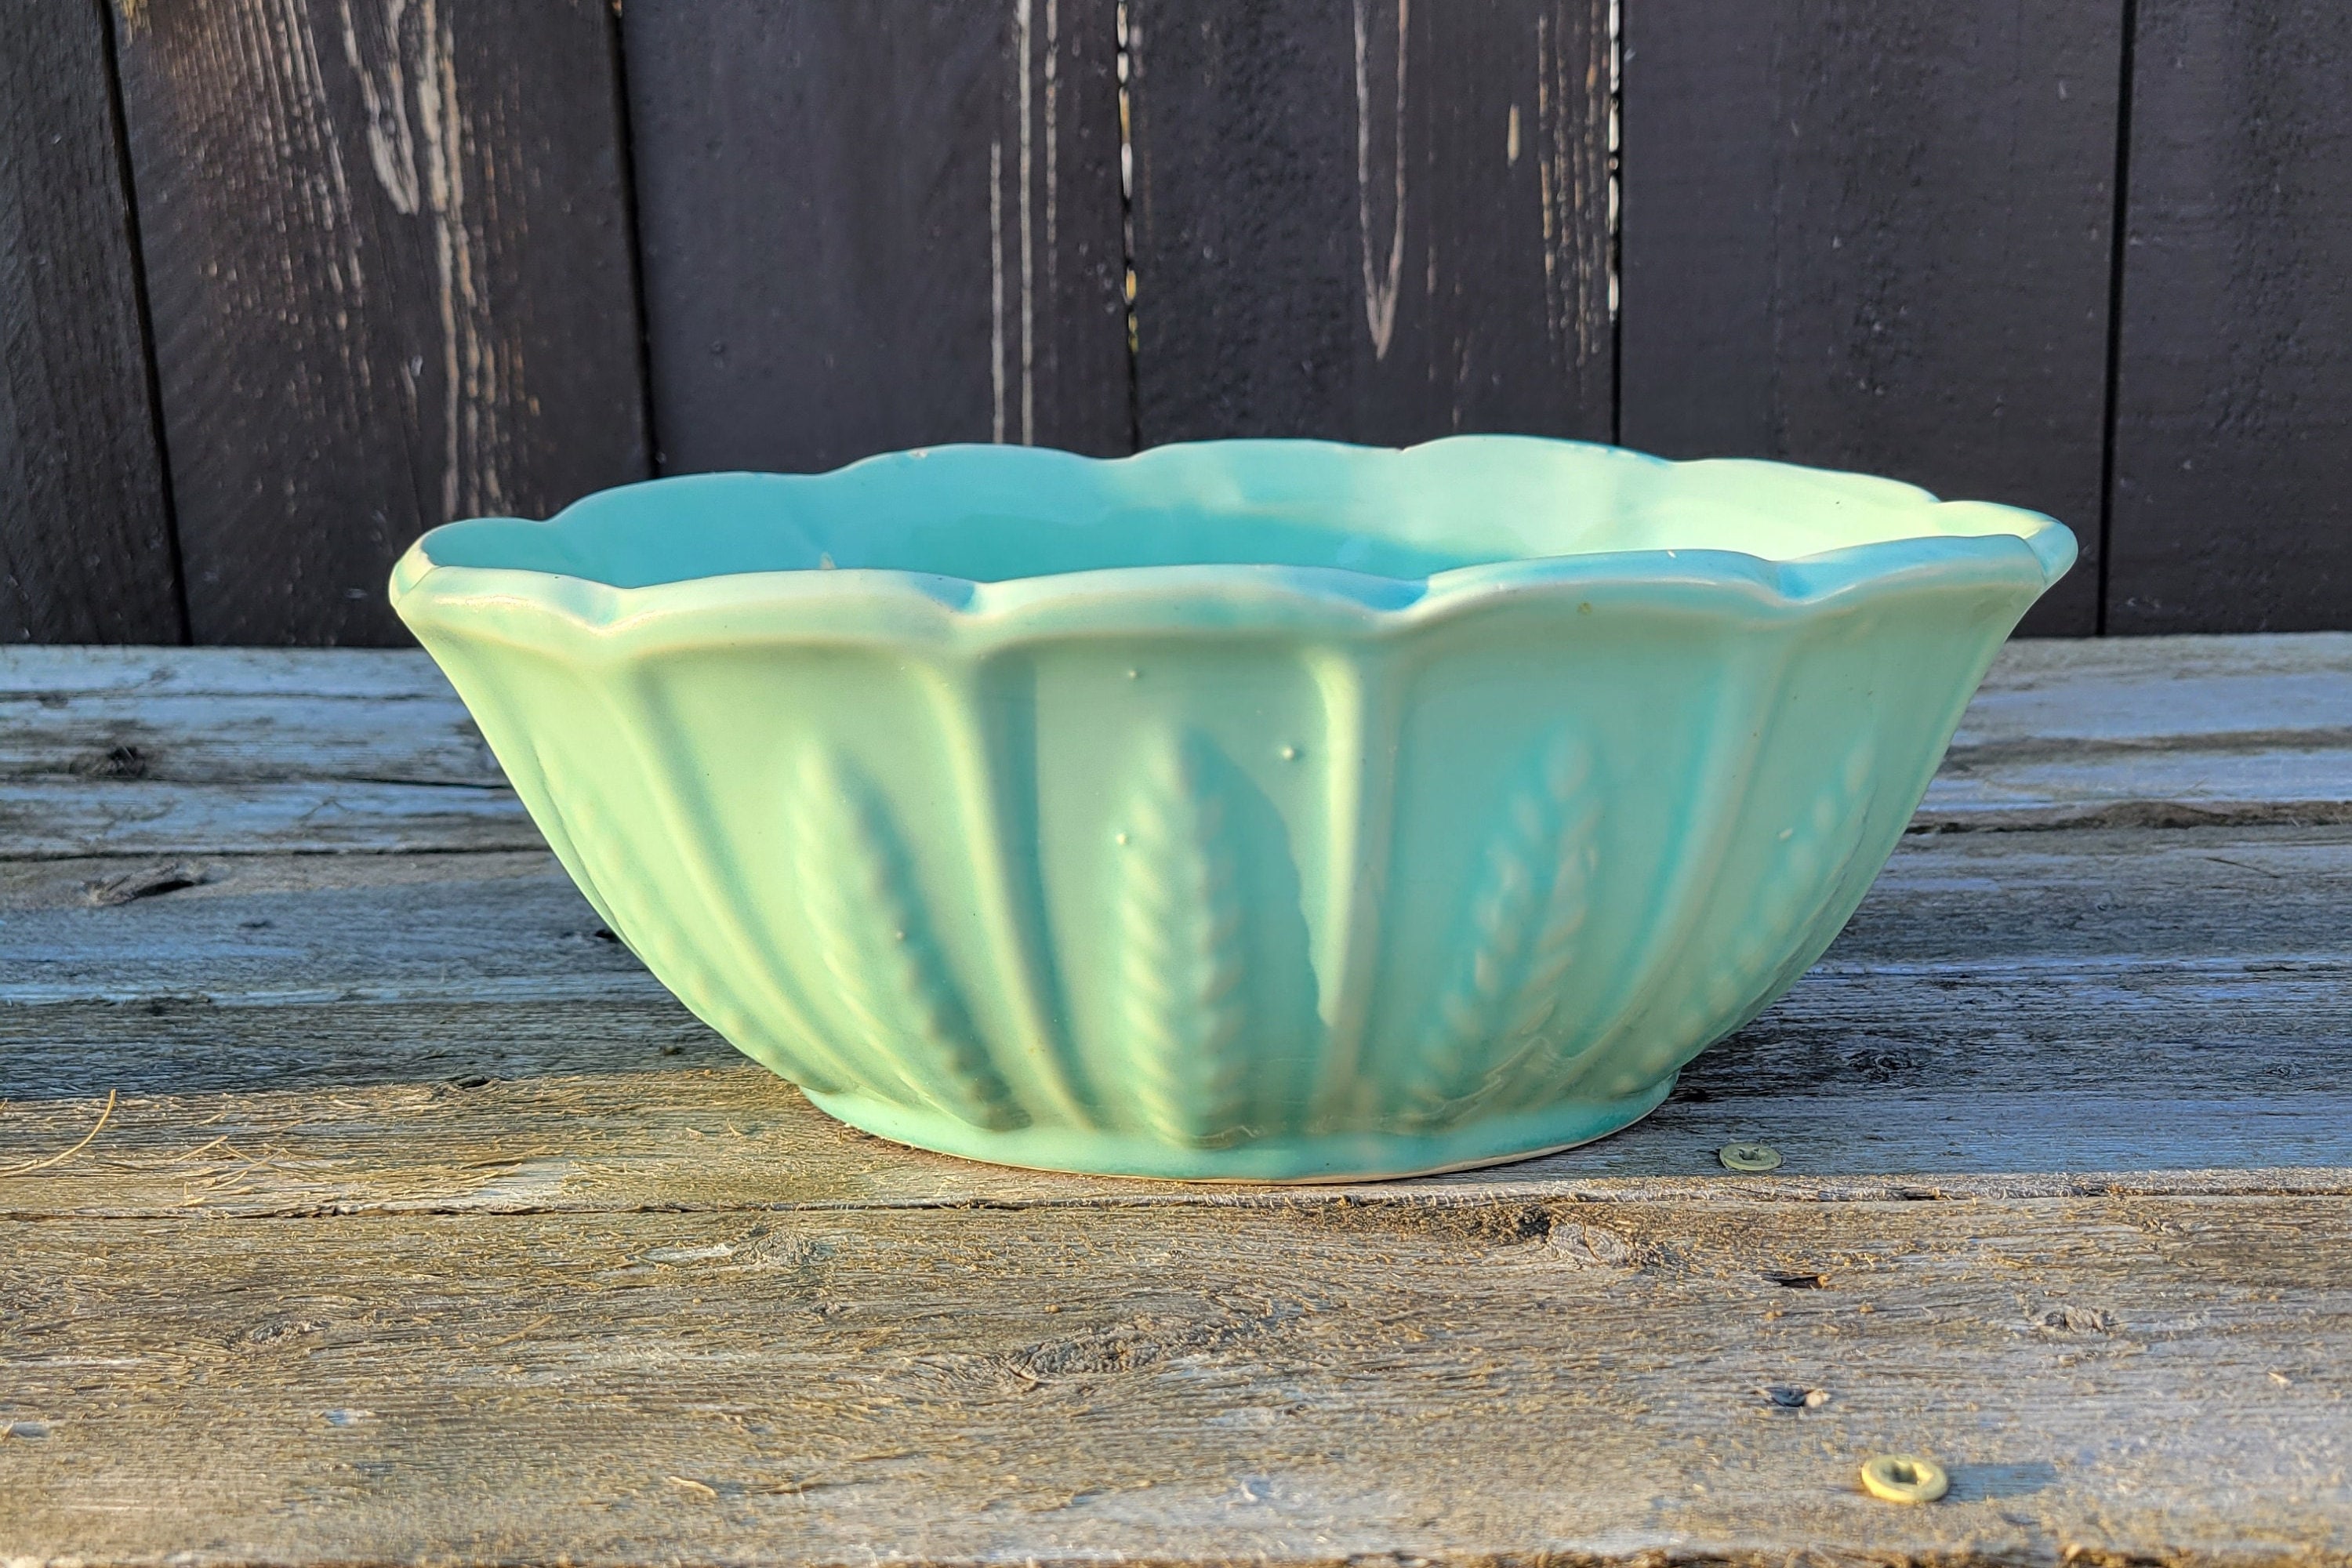 Large Oval Salad Bowl — peter pots pottery